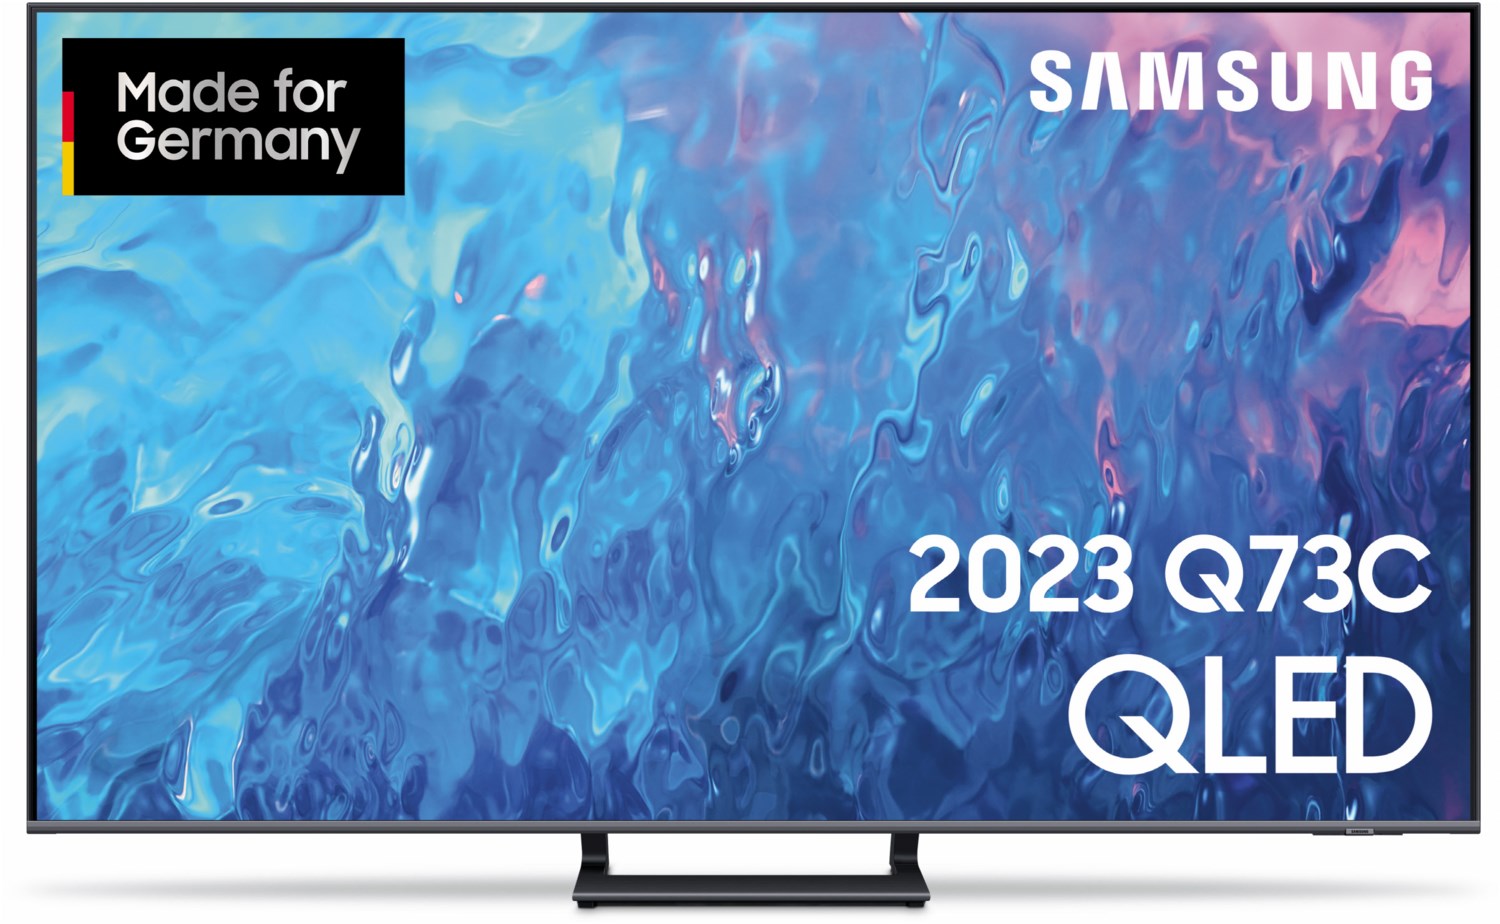 Samsung QLED TV UHD 4K 65 Zoll (165 cm) schwarz